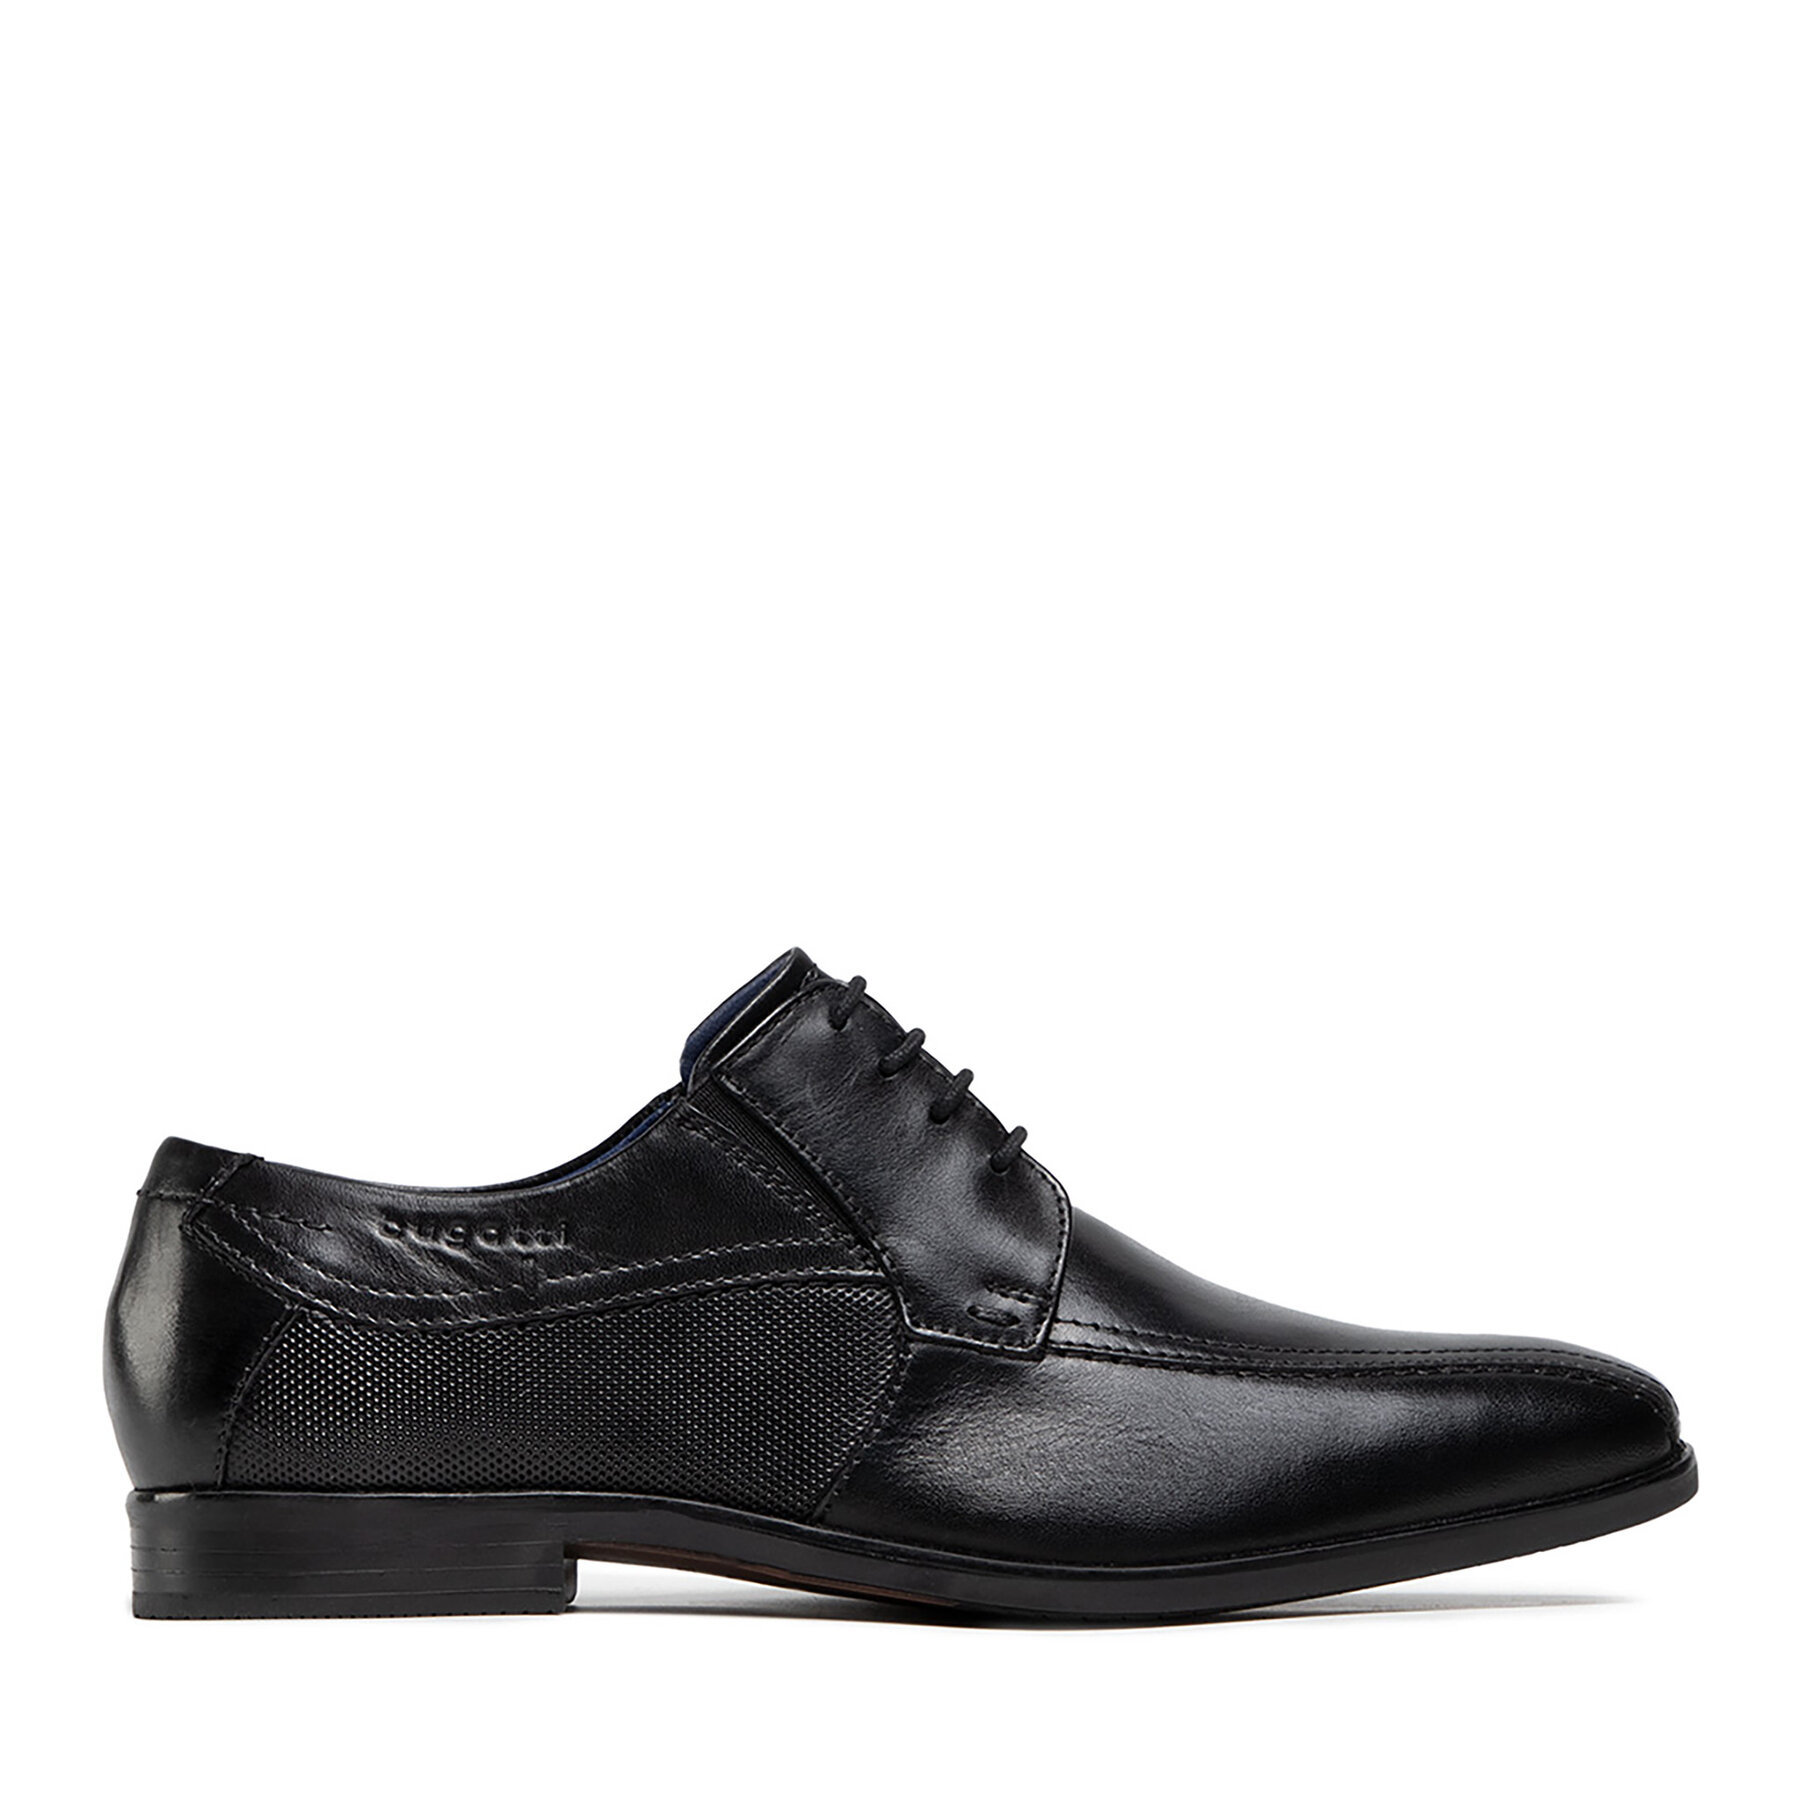 Comprar en oferta Bugatti Mens Lace-Up Shoes Savio Evo black (311196061000100)